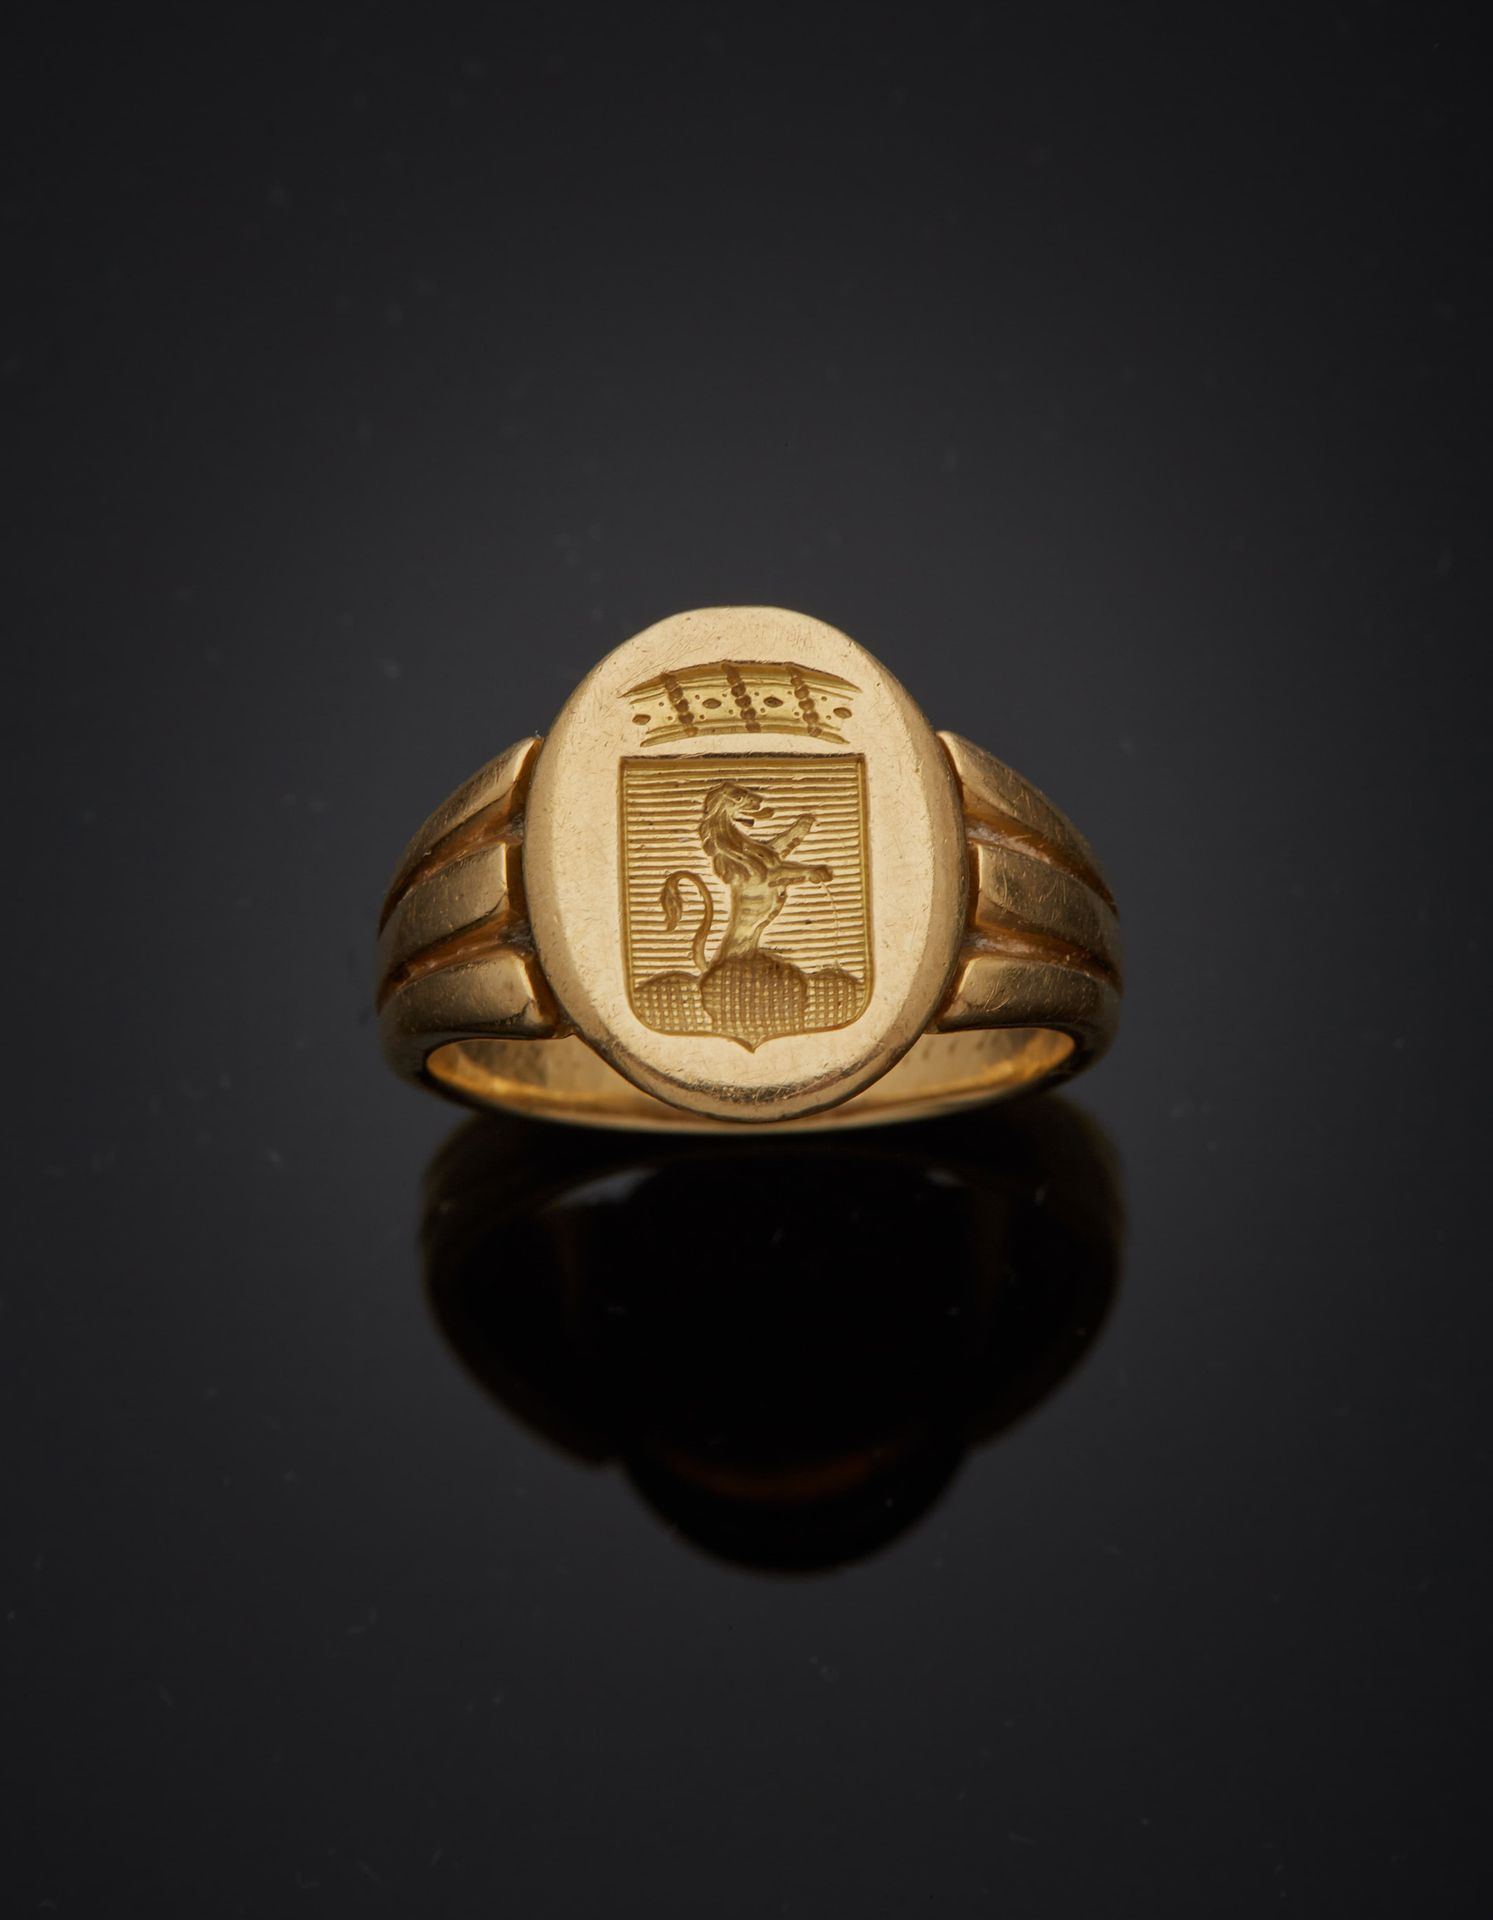 Null Chevalière，18K黄金750‰，装饰有一个椭圆形的盘子，上面刻有男爵的纹章，凹槽环。有使用过的痕迹。
手指尺寸51 重量8克